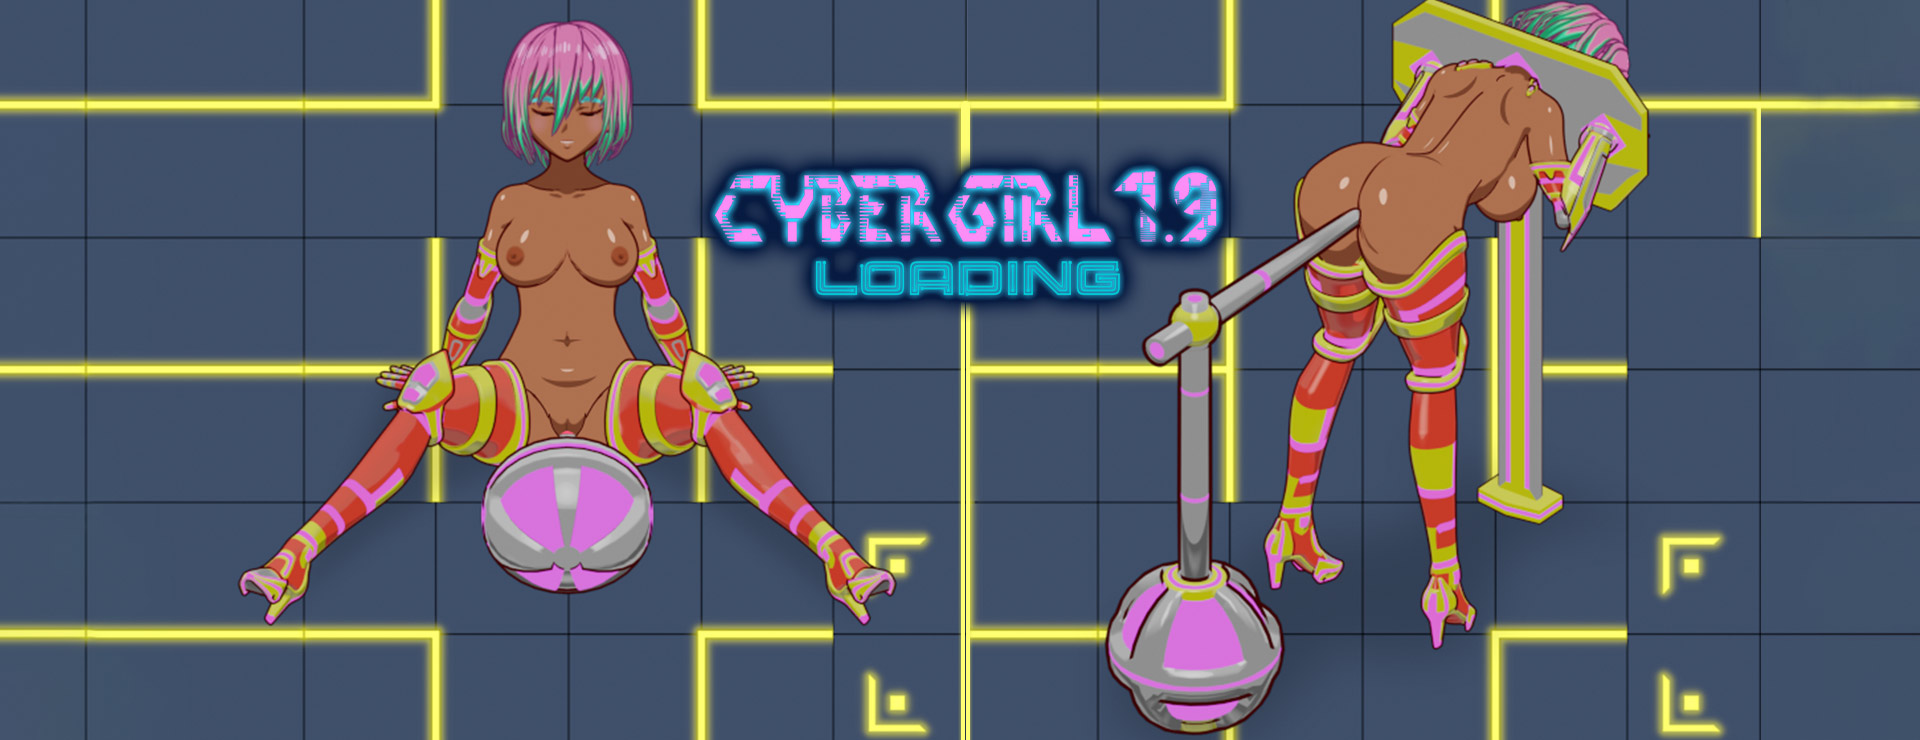 Cyber Girl 1.9 LOADING - Action Adventure Spiel